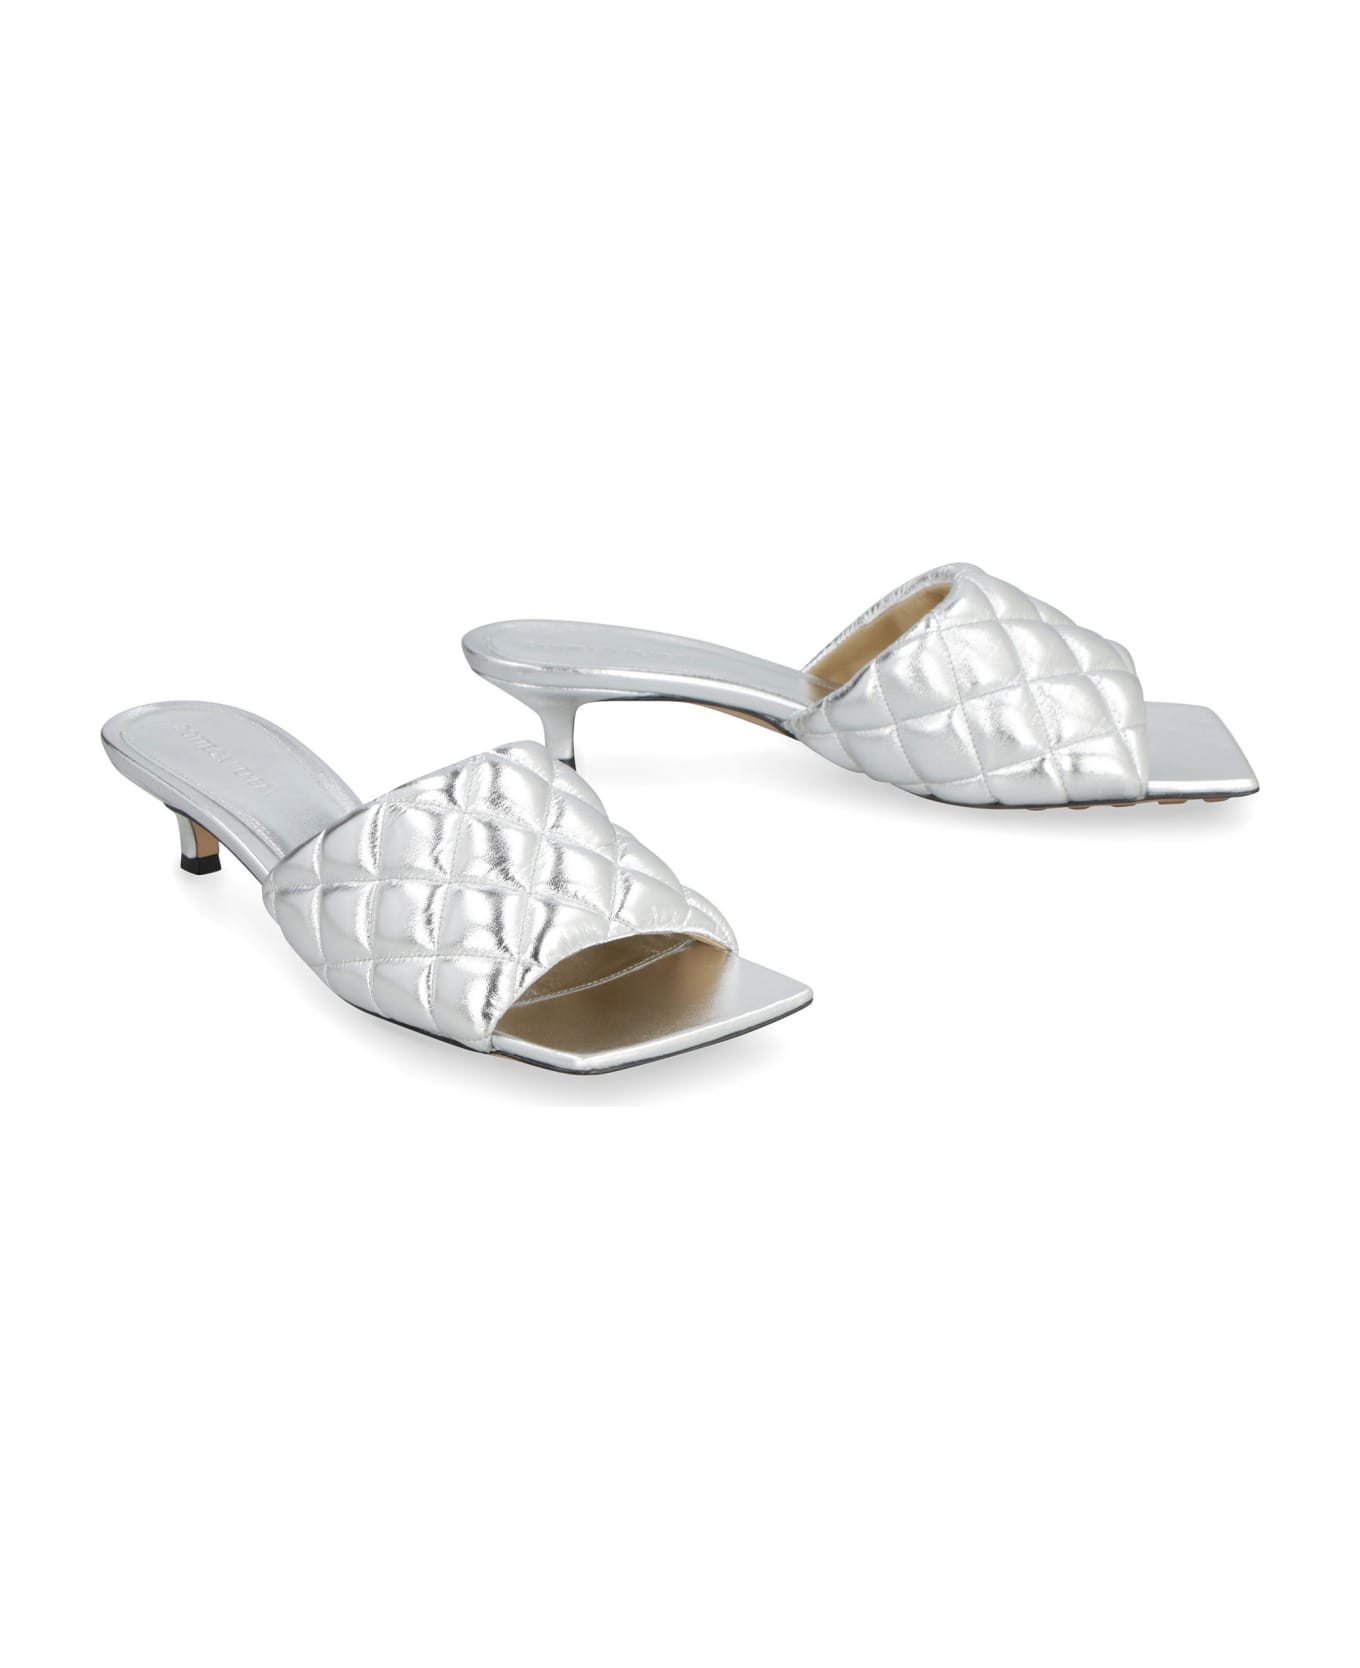 Bottega Veneta Padded Leather Sandals - silver サンダル